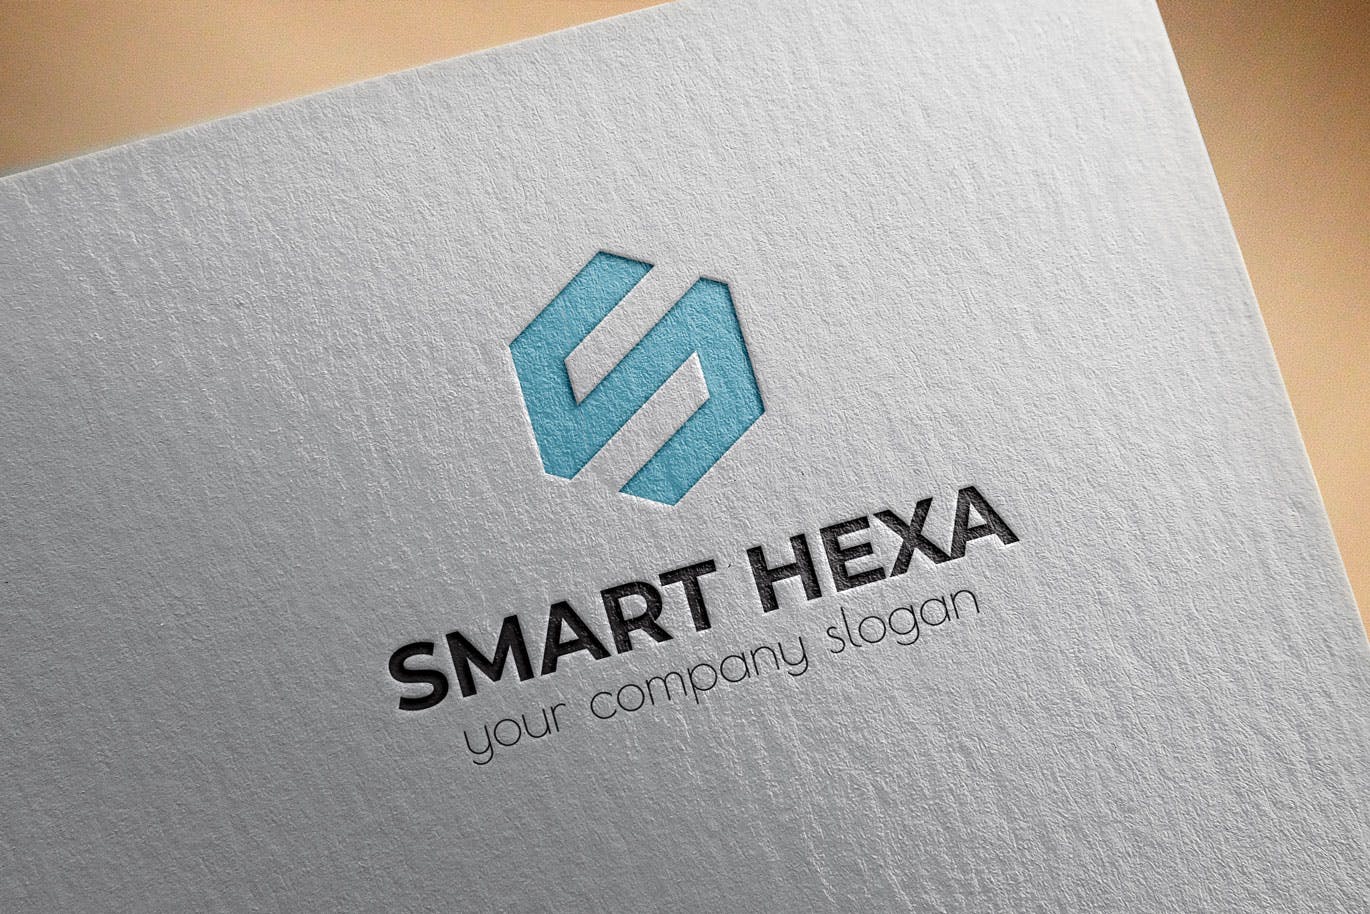 S字母图形Logo设计16设计网精选模板 Smart Hexa Awesome Logo Template插图(2)